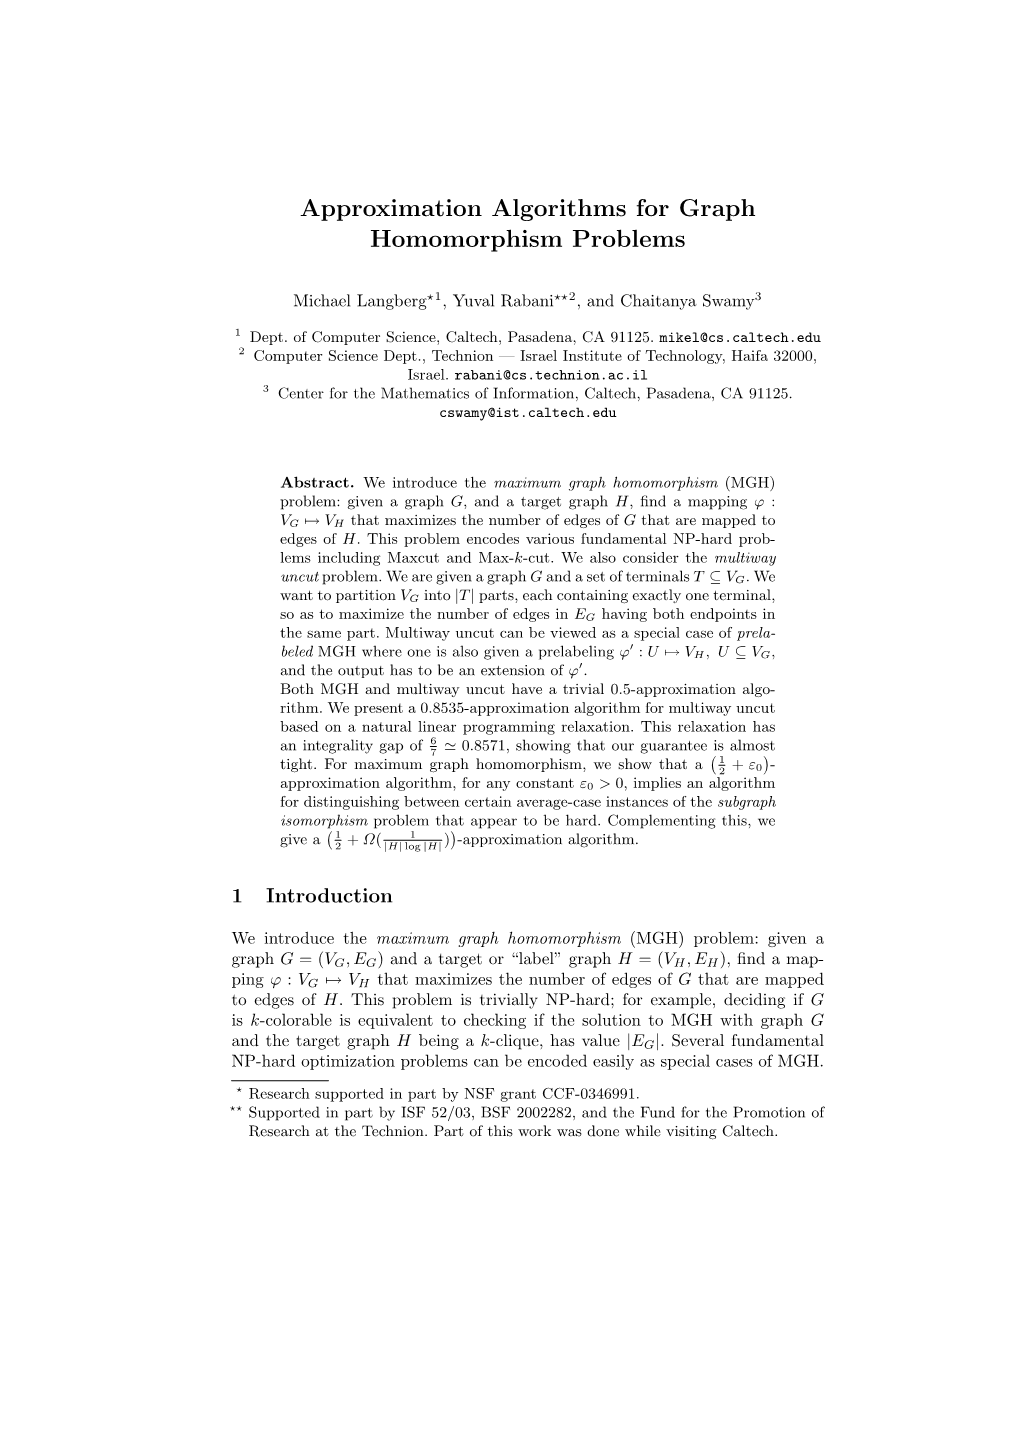 Approximation Algorithms for Graph Homomorphism Problems